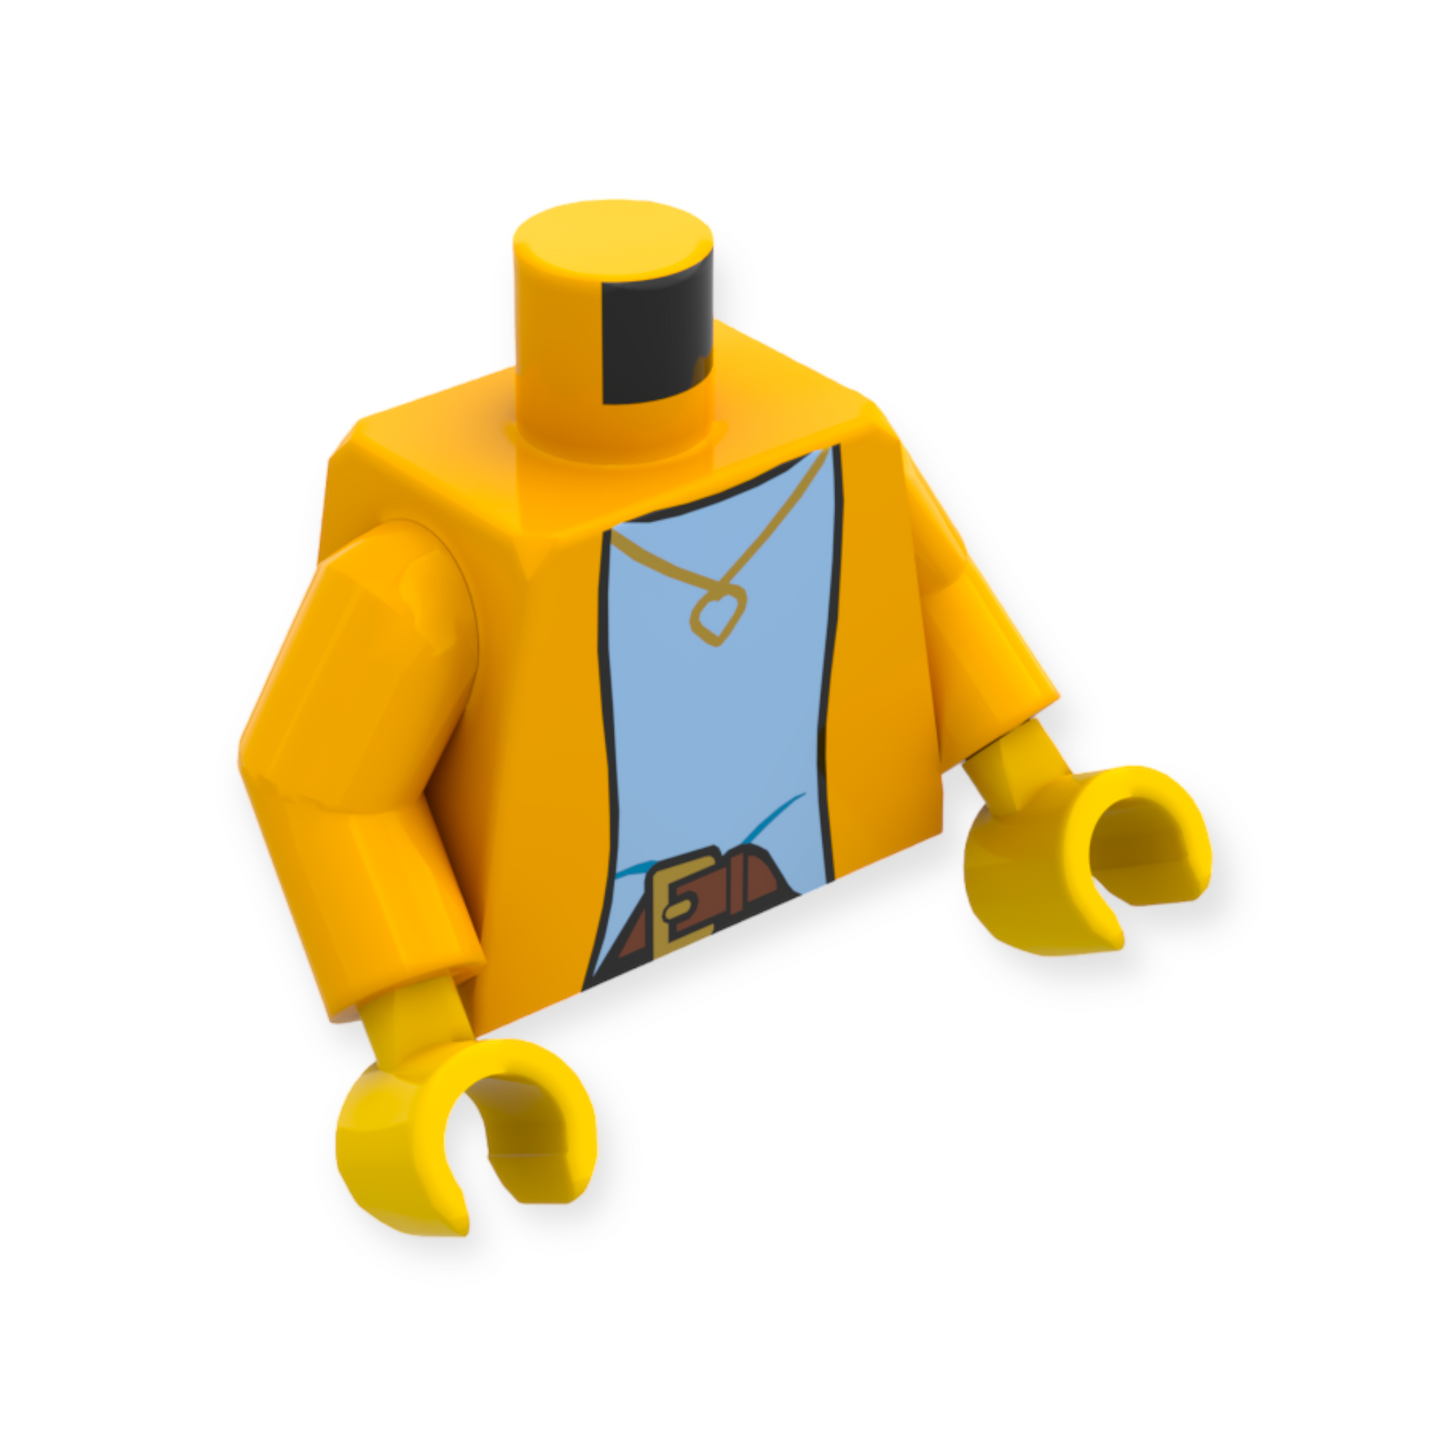 LEGO Torso - 5452 Jacket over Bright Light Blue Shirt